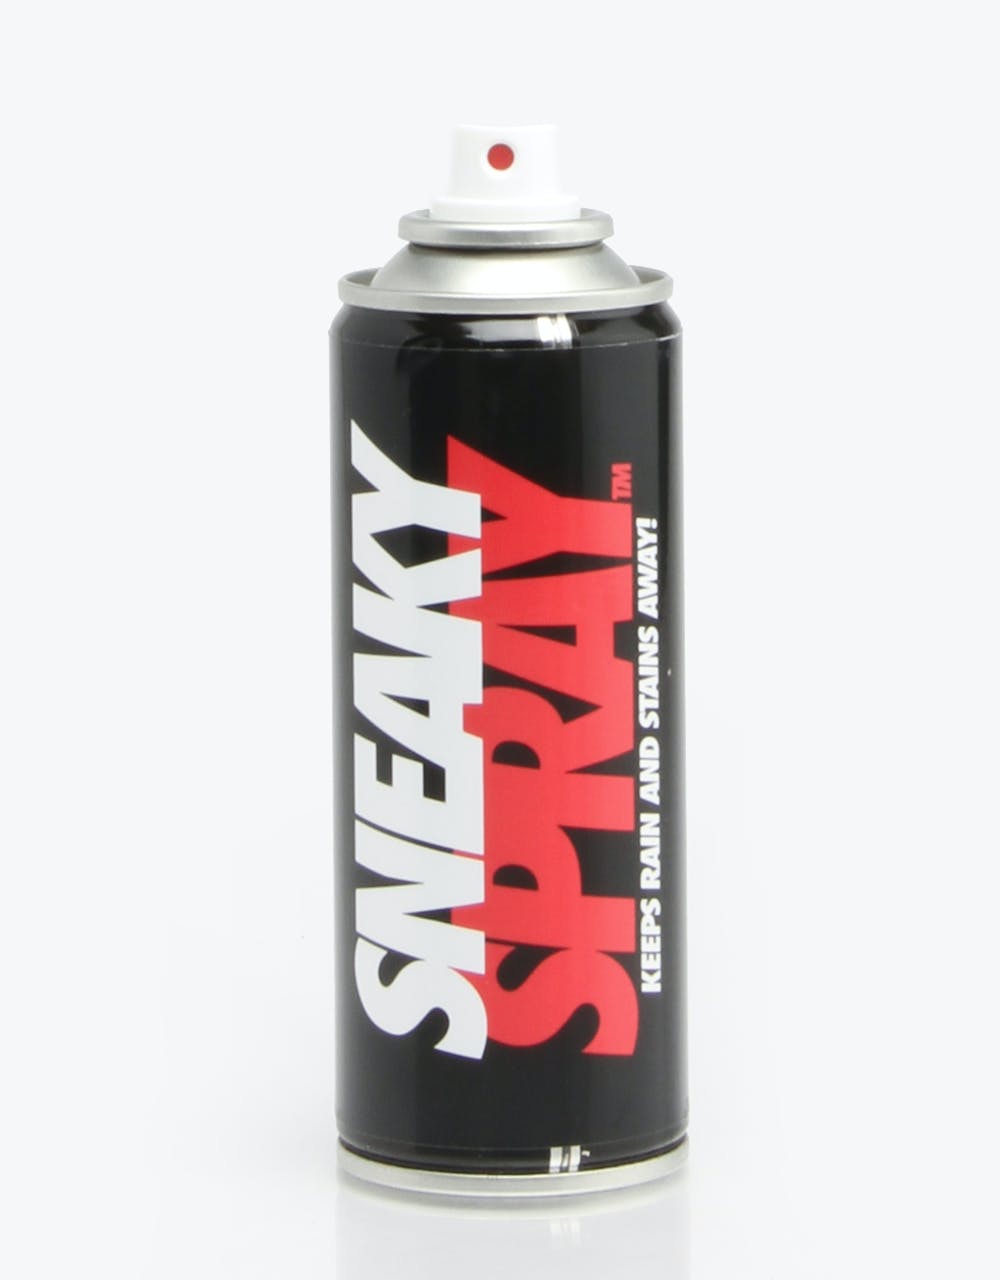 Sneaky Spray 200ml